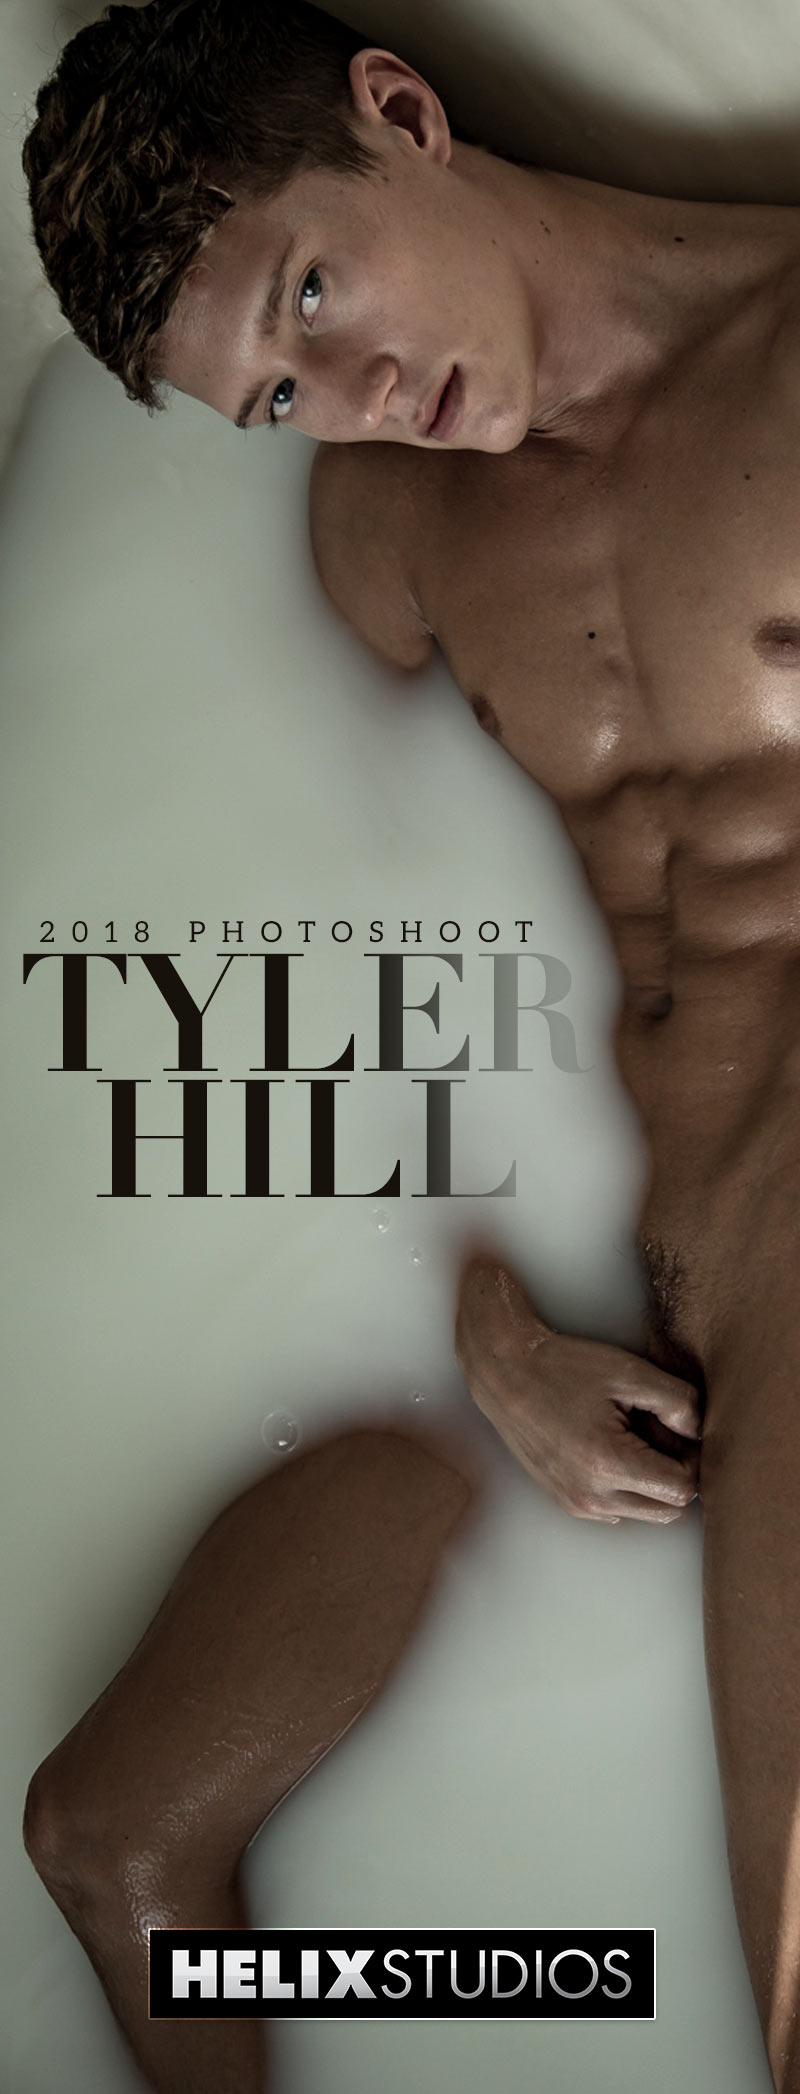 Tyler Hill's 2018 Photoshoot at HelixStudios